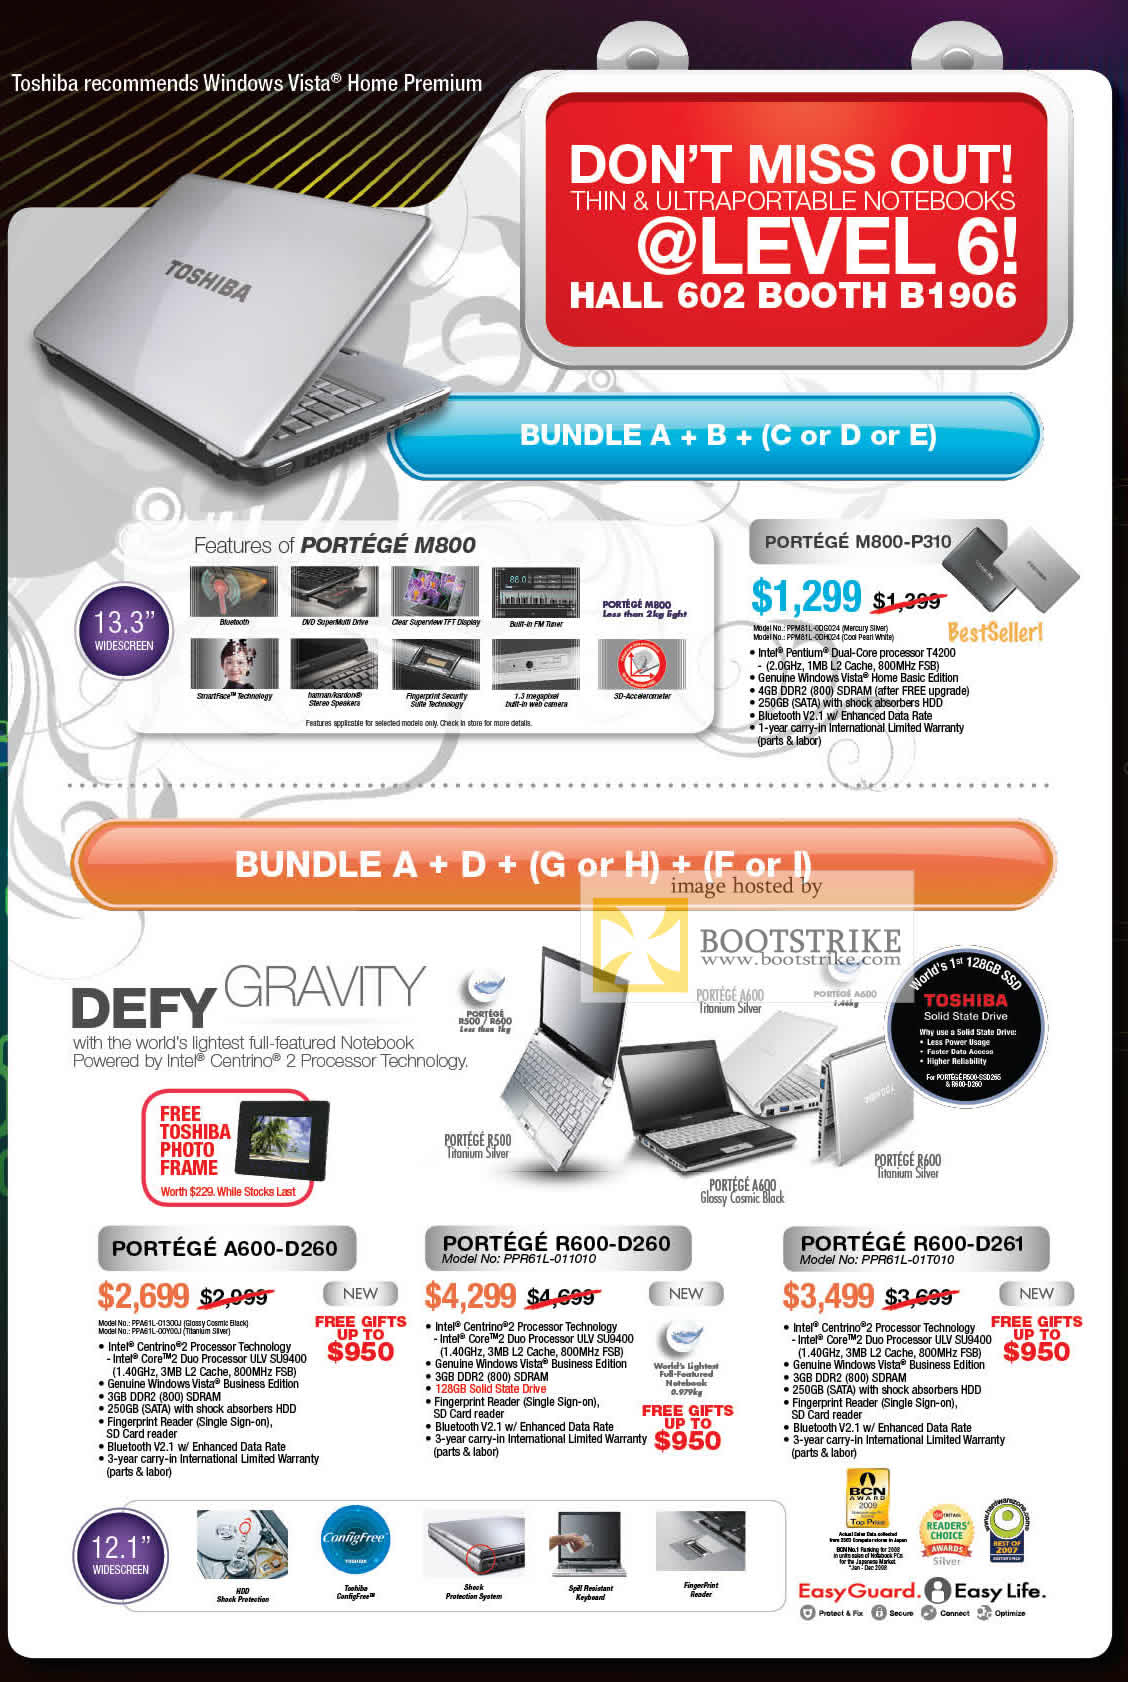 PC Show 2009 price list image brochure of Toshiba Portege M800 A600 D260 R600 Notebooks